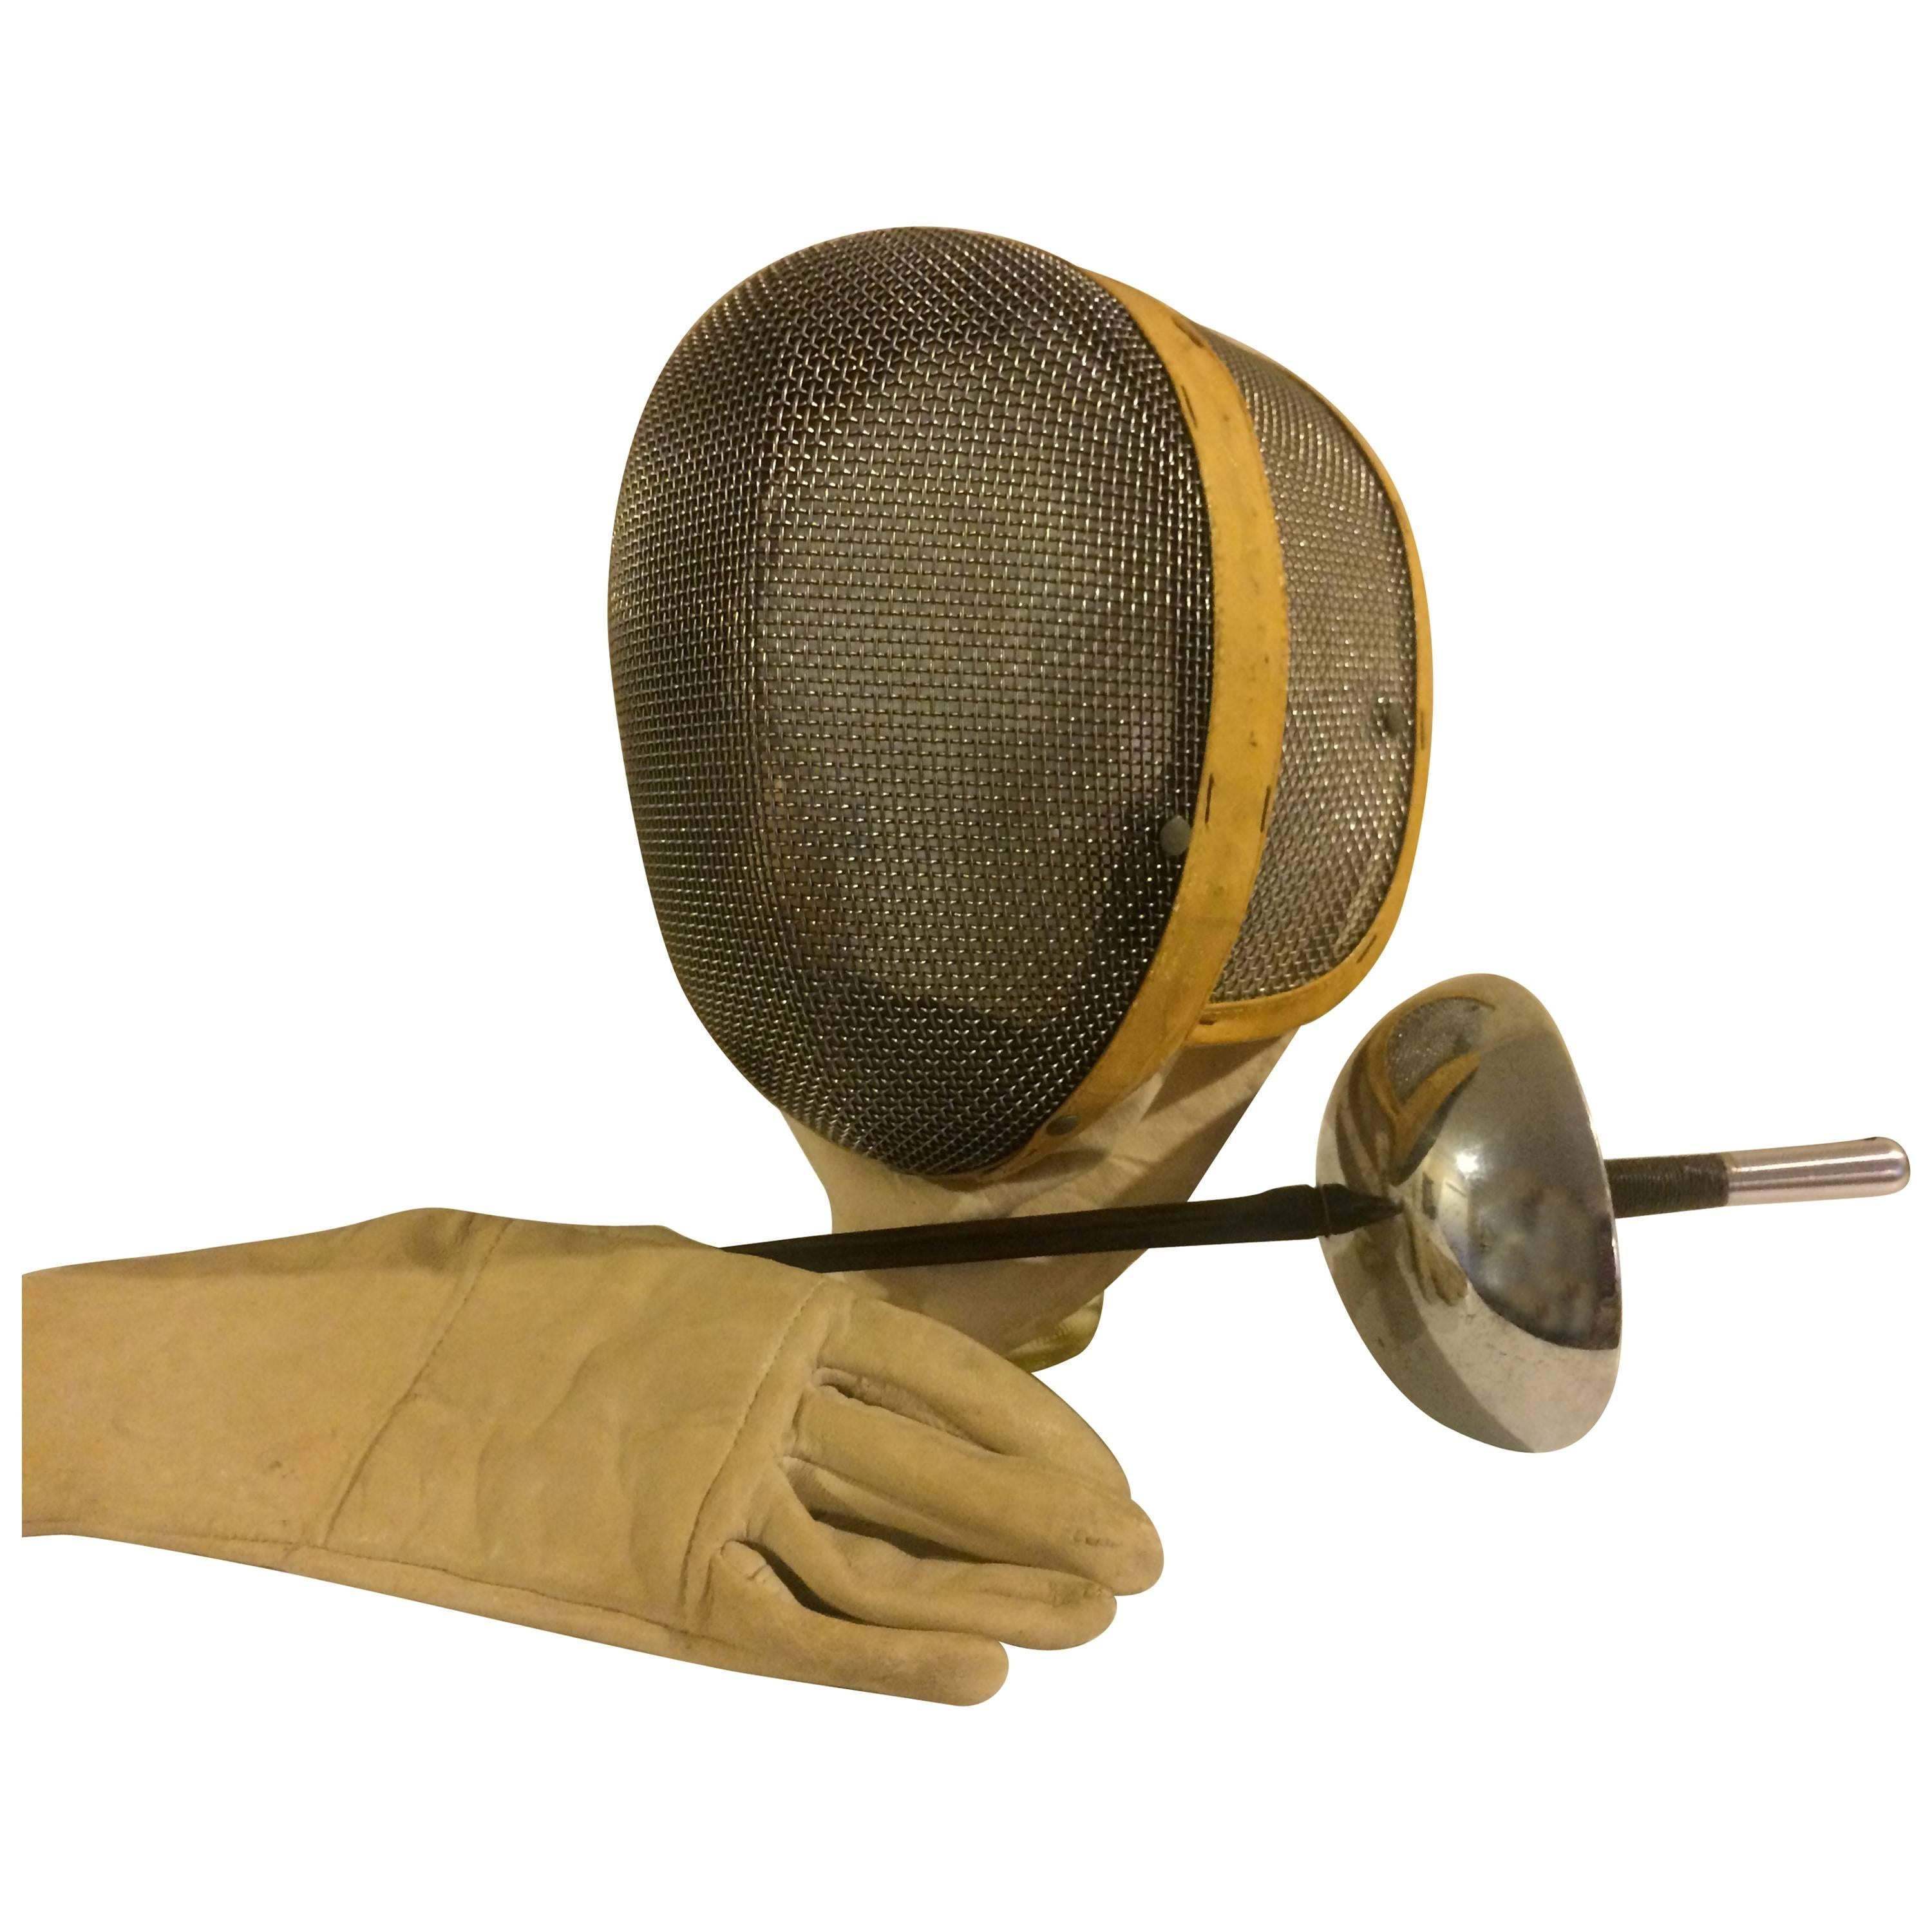 Vintage Castello Fencing Mask, Leather Glove and Foil